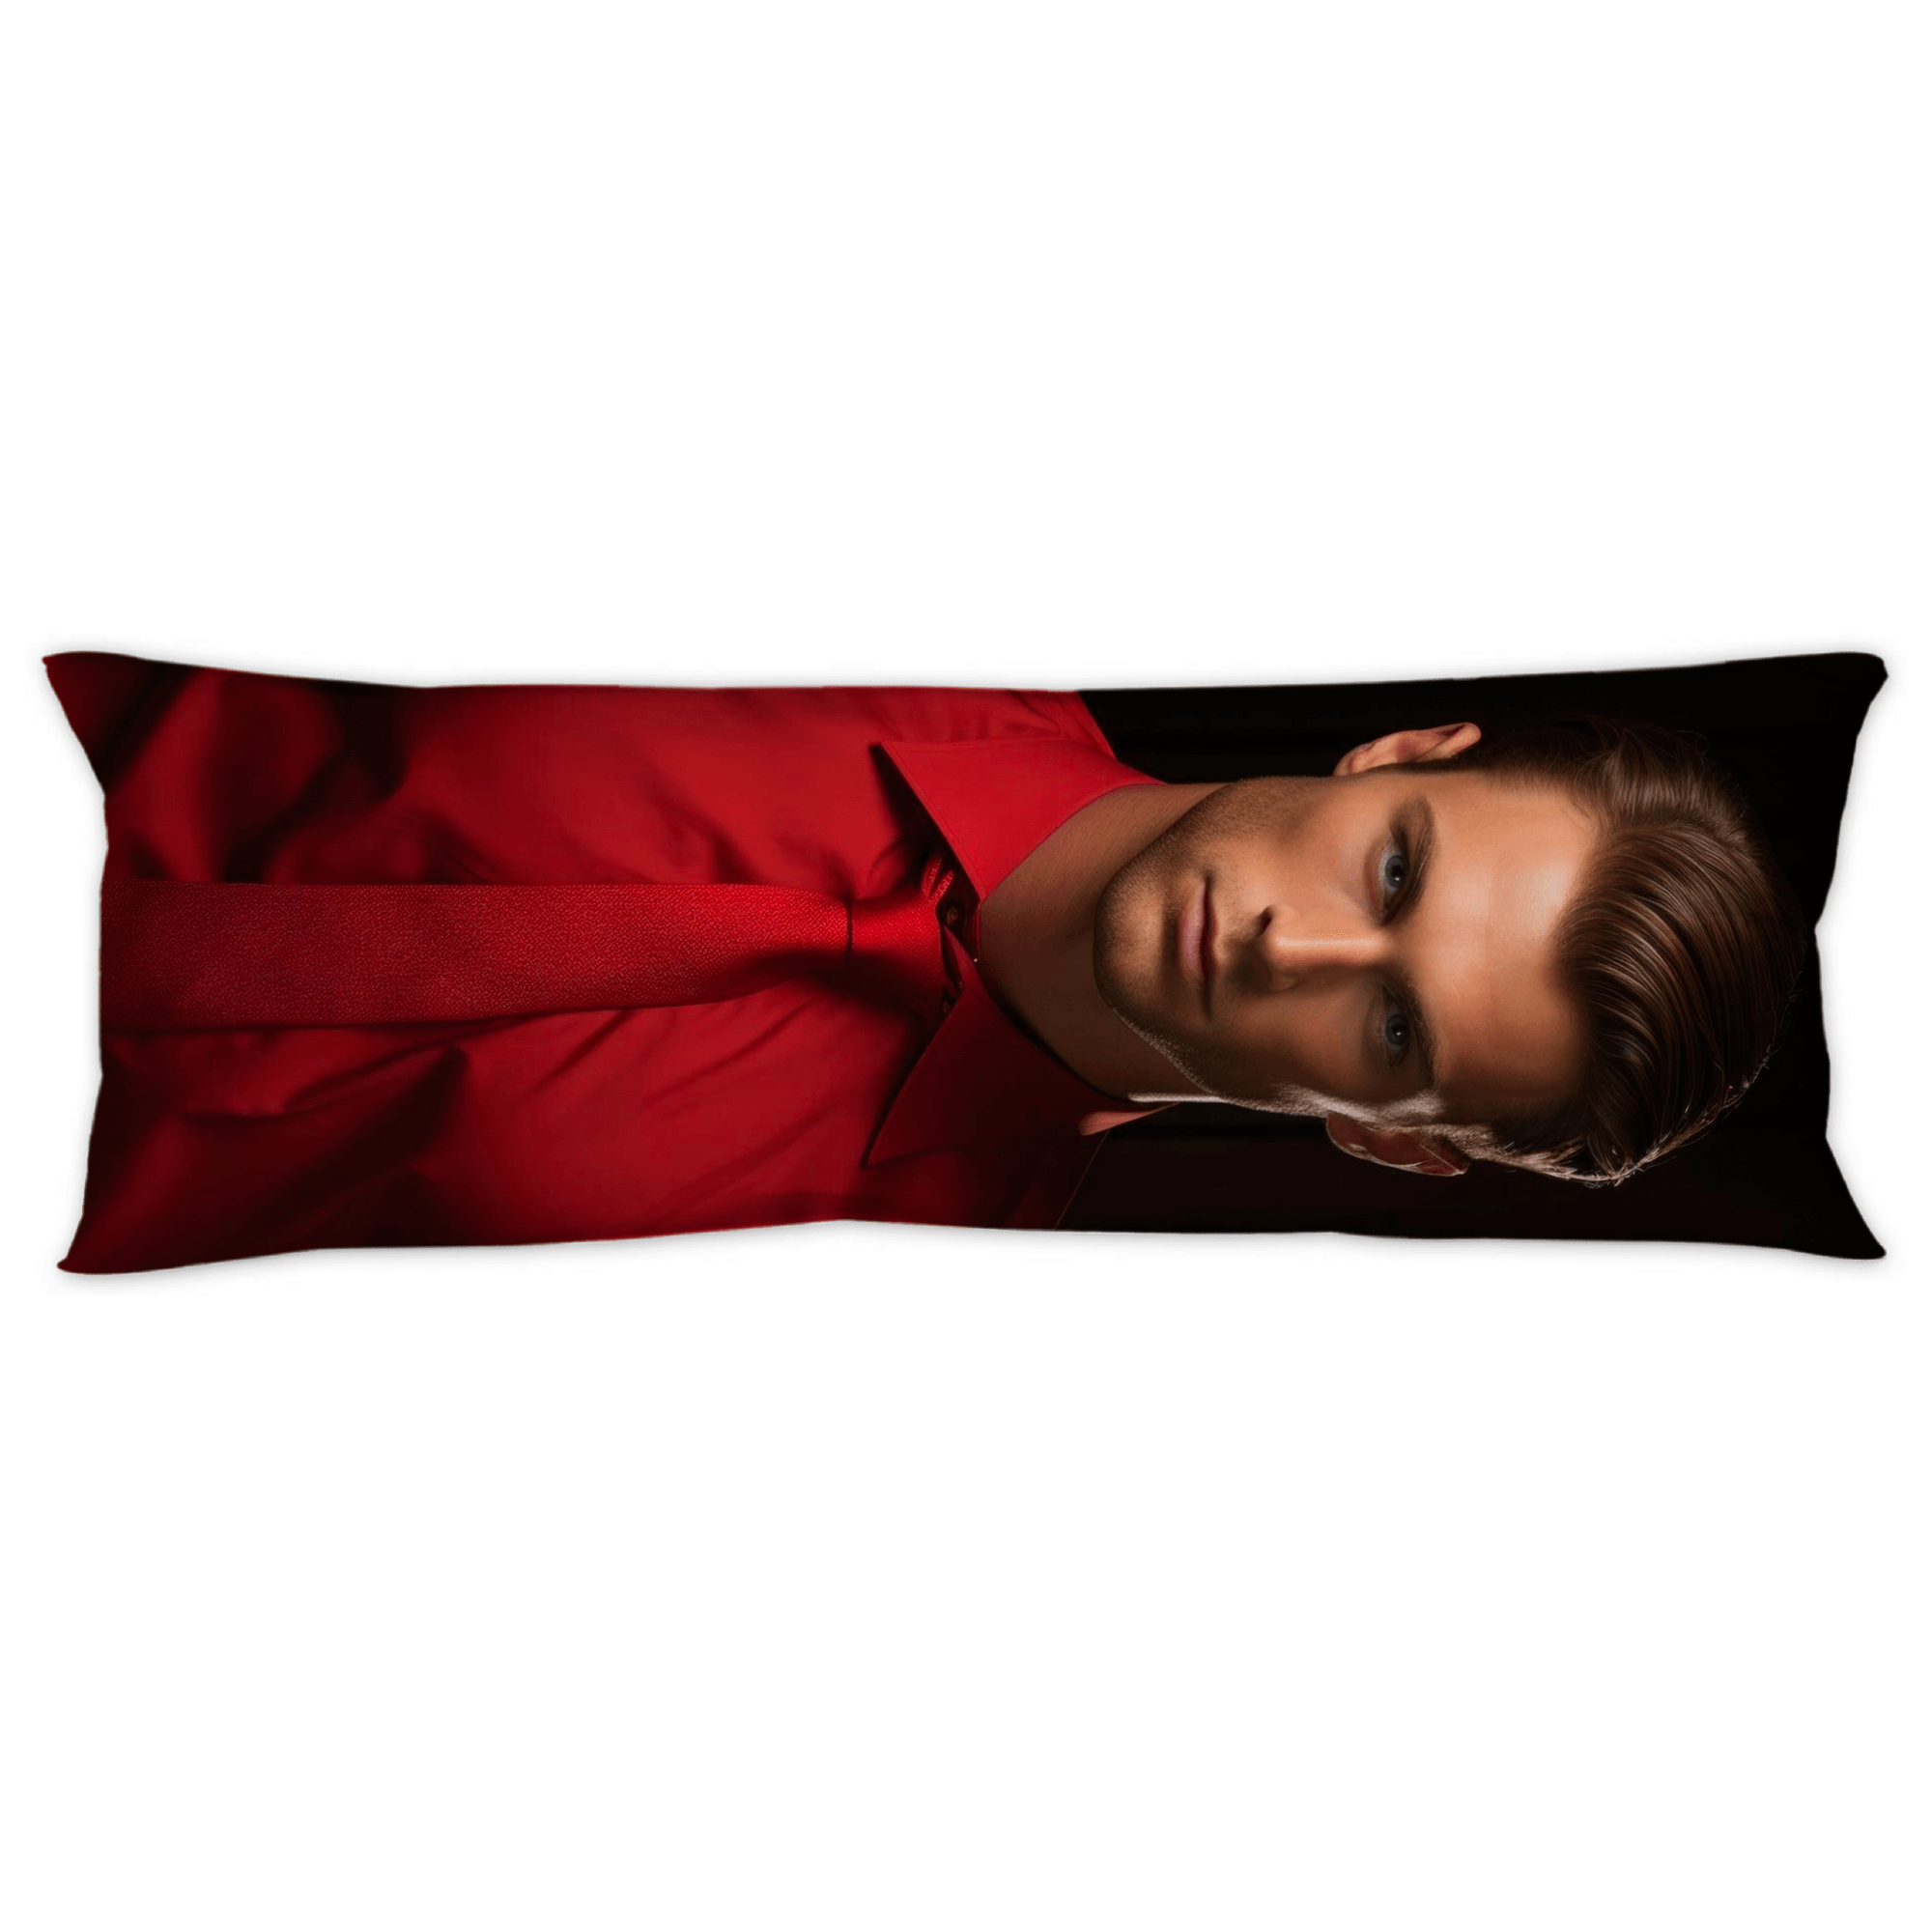 Shop Custom Pillows: Create Your Own Photo Cushion